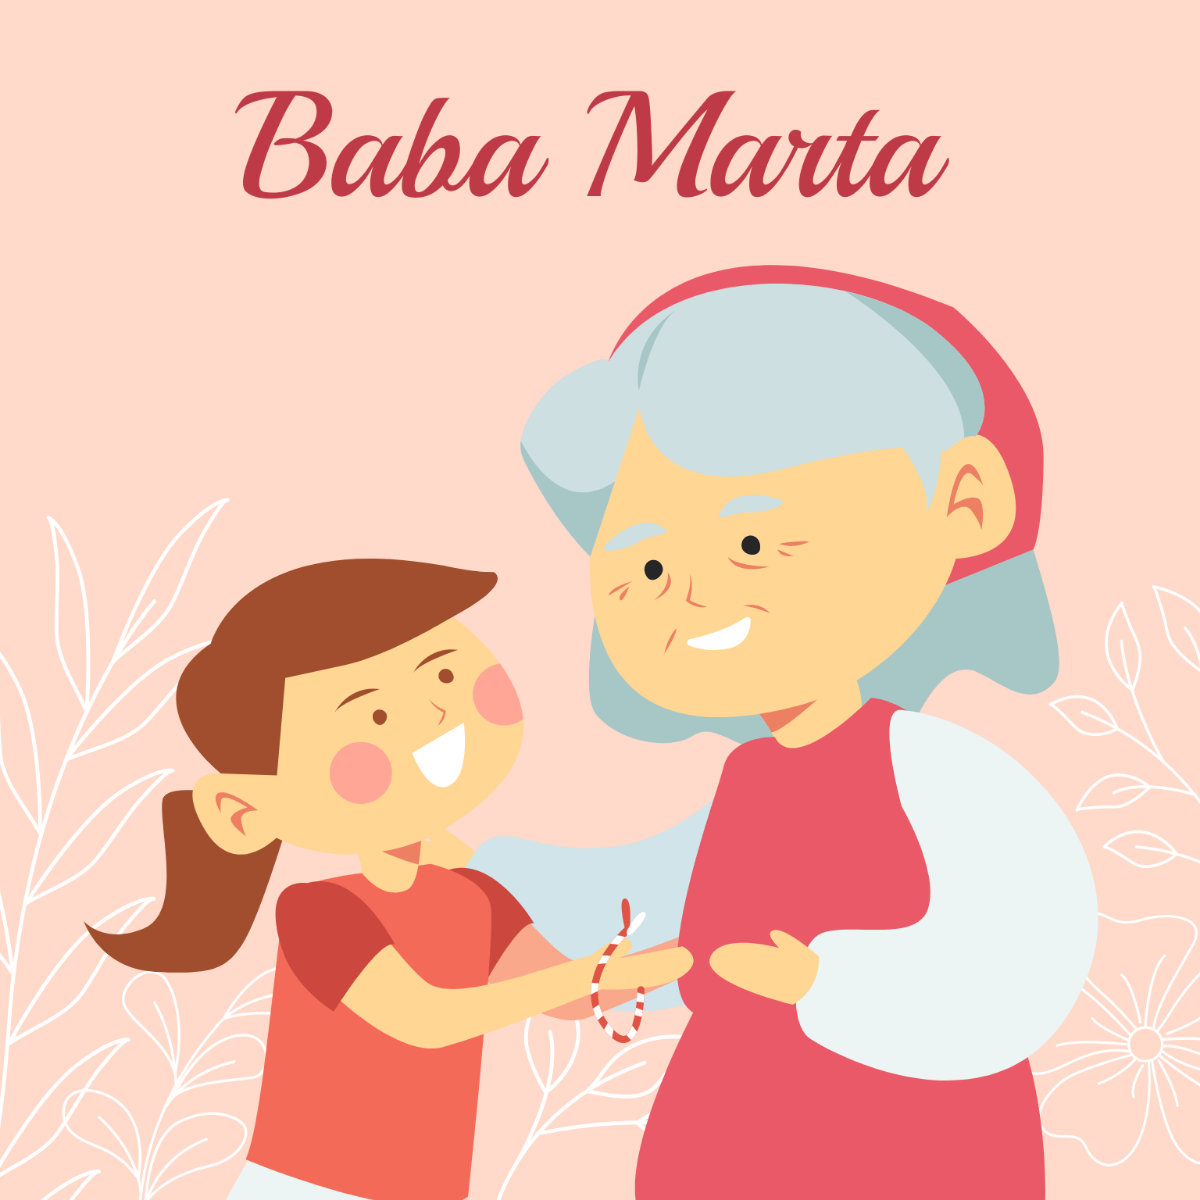 Free Baba Marta Illustration Template